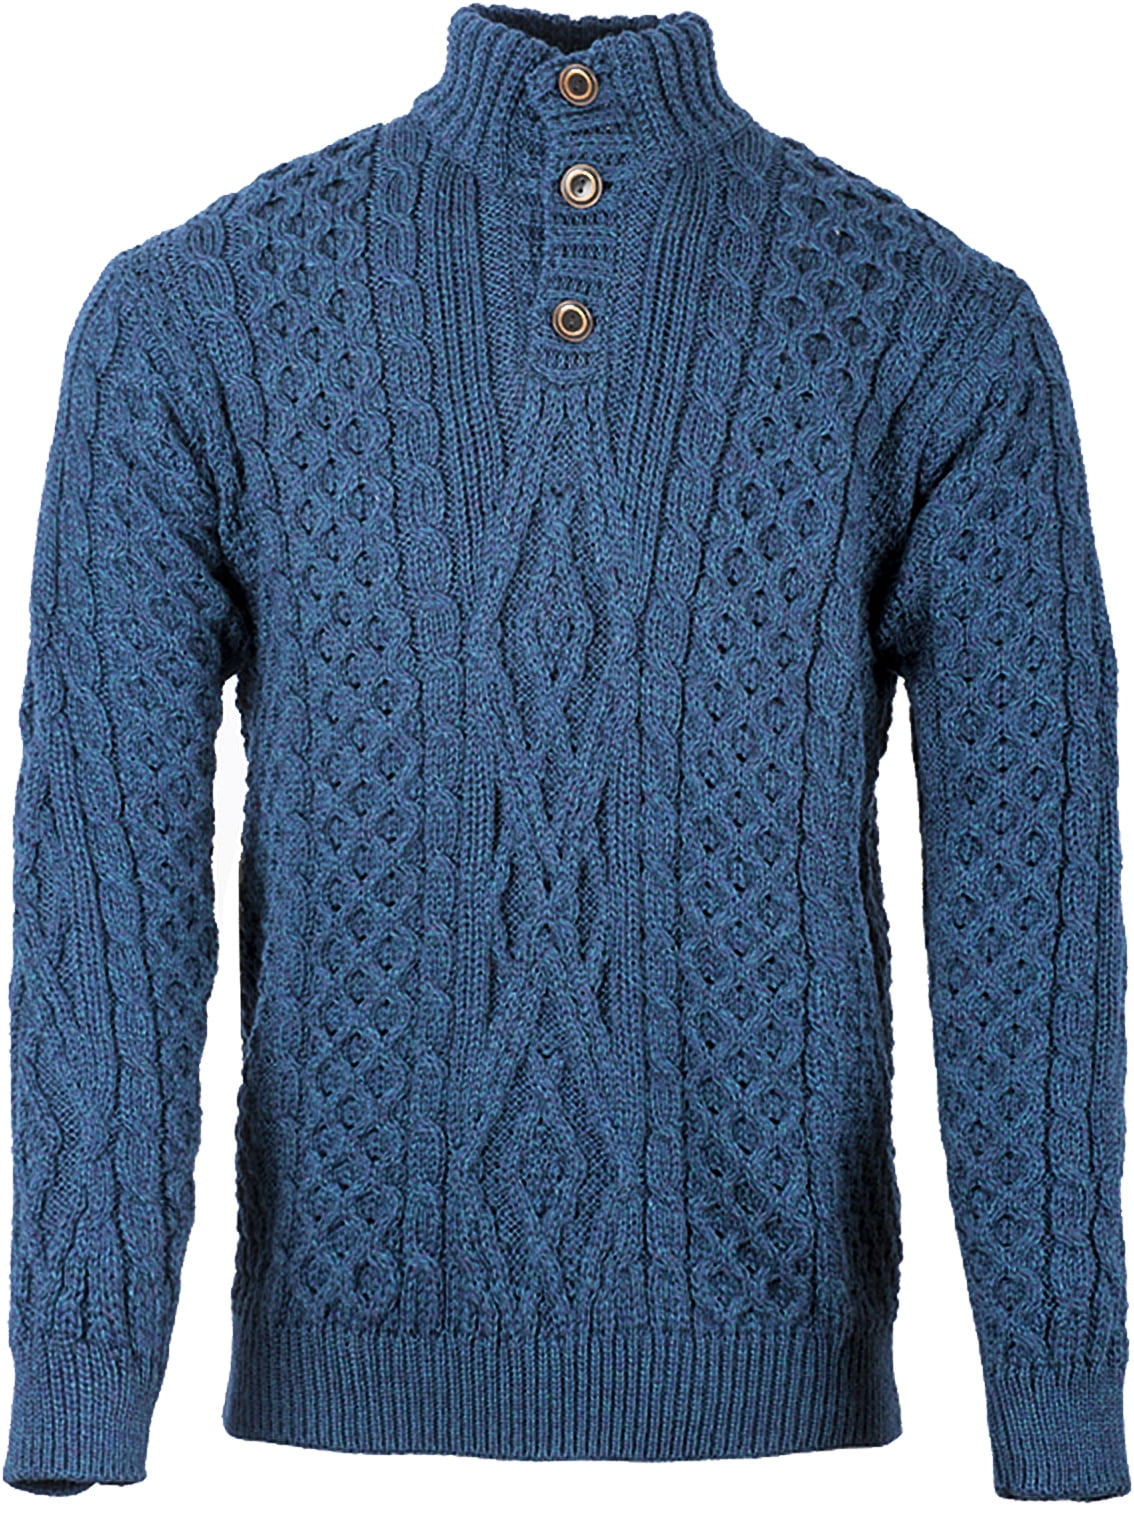 Aran Woollen Mills Button-Up Collar Cardigan Sweater Celtic Troyer 100%  Premium Merino Wool Jumper Men`s Pullover Made in Ireland